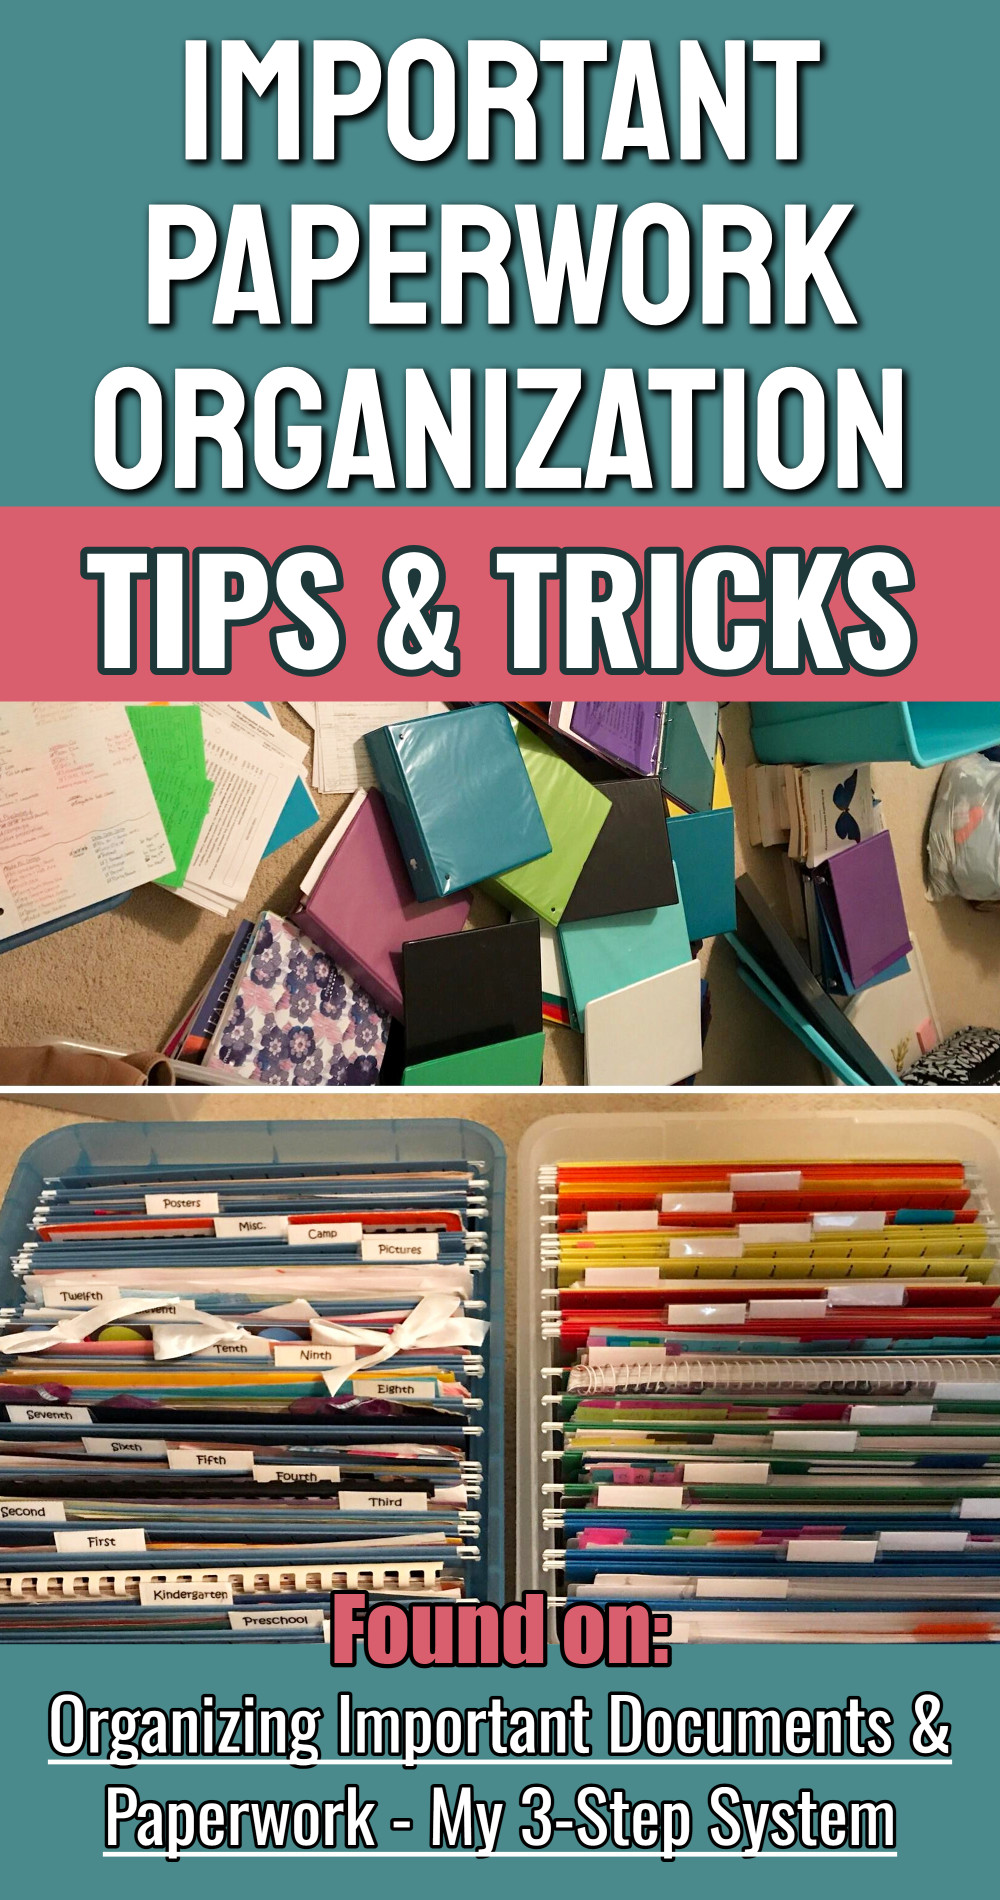 Important documents organization tips tricks